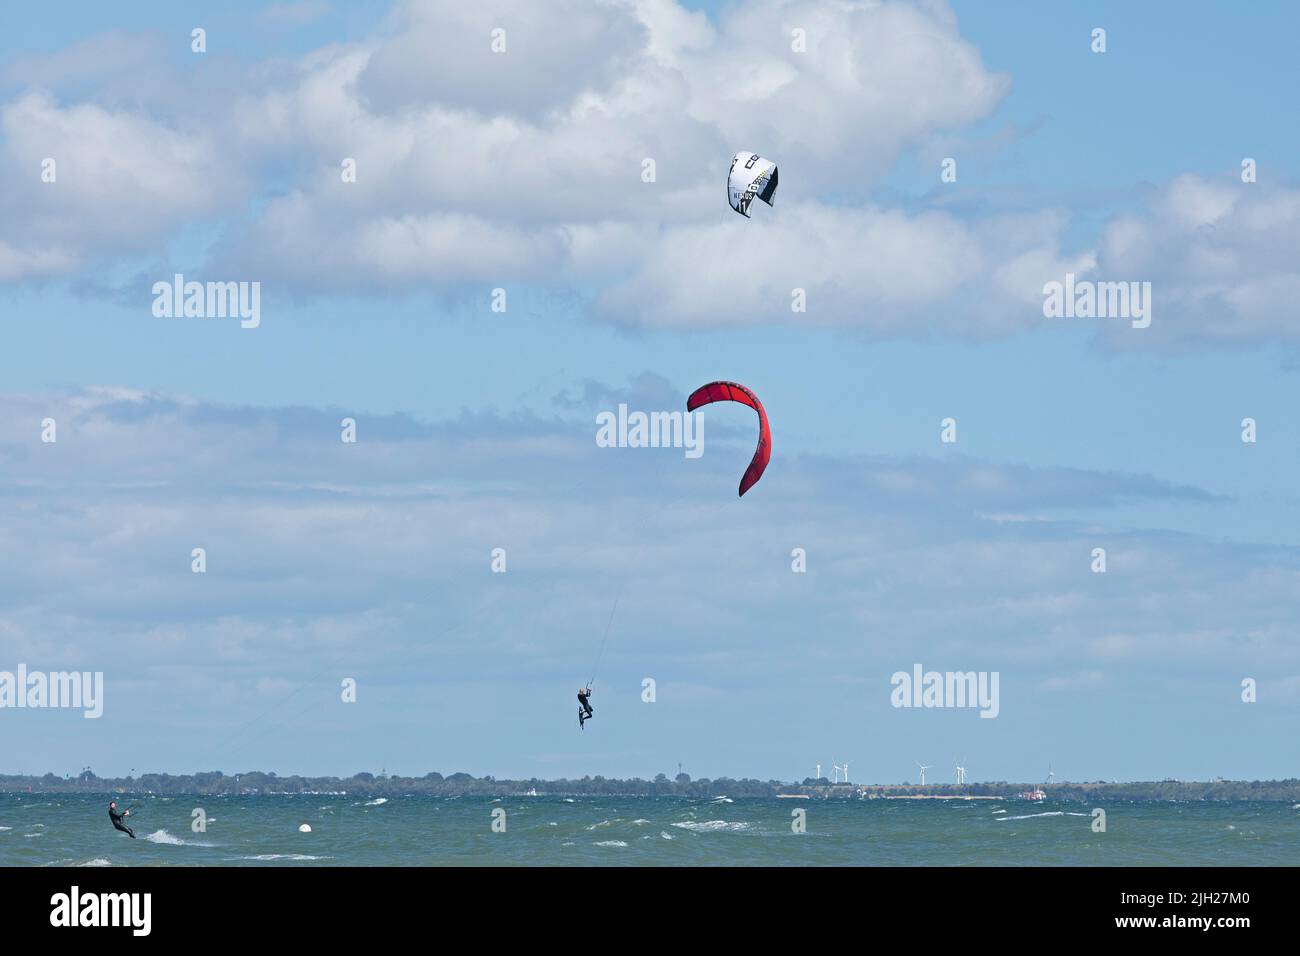 Kitesurfer jumping, Steinwarder Peninsula, Heiligenhafen, Schleswig-Holstein, Germany Stock Photo